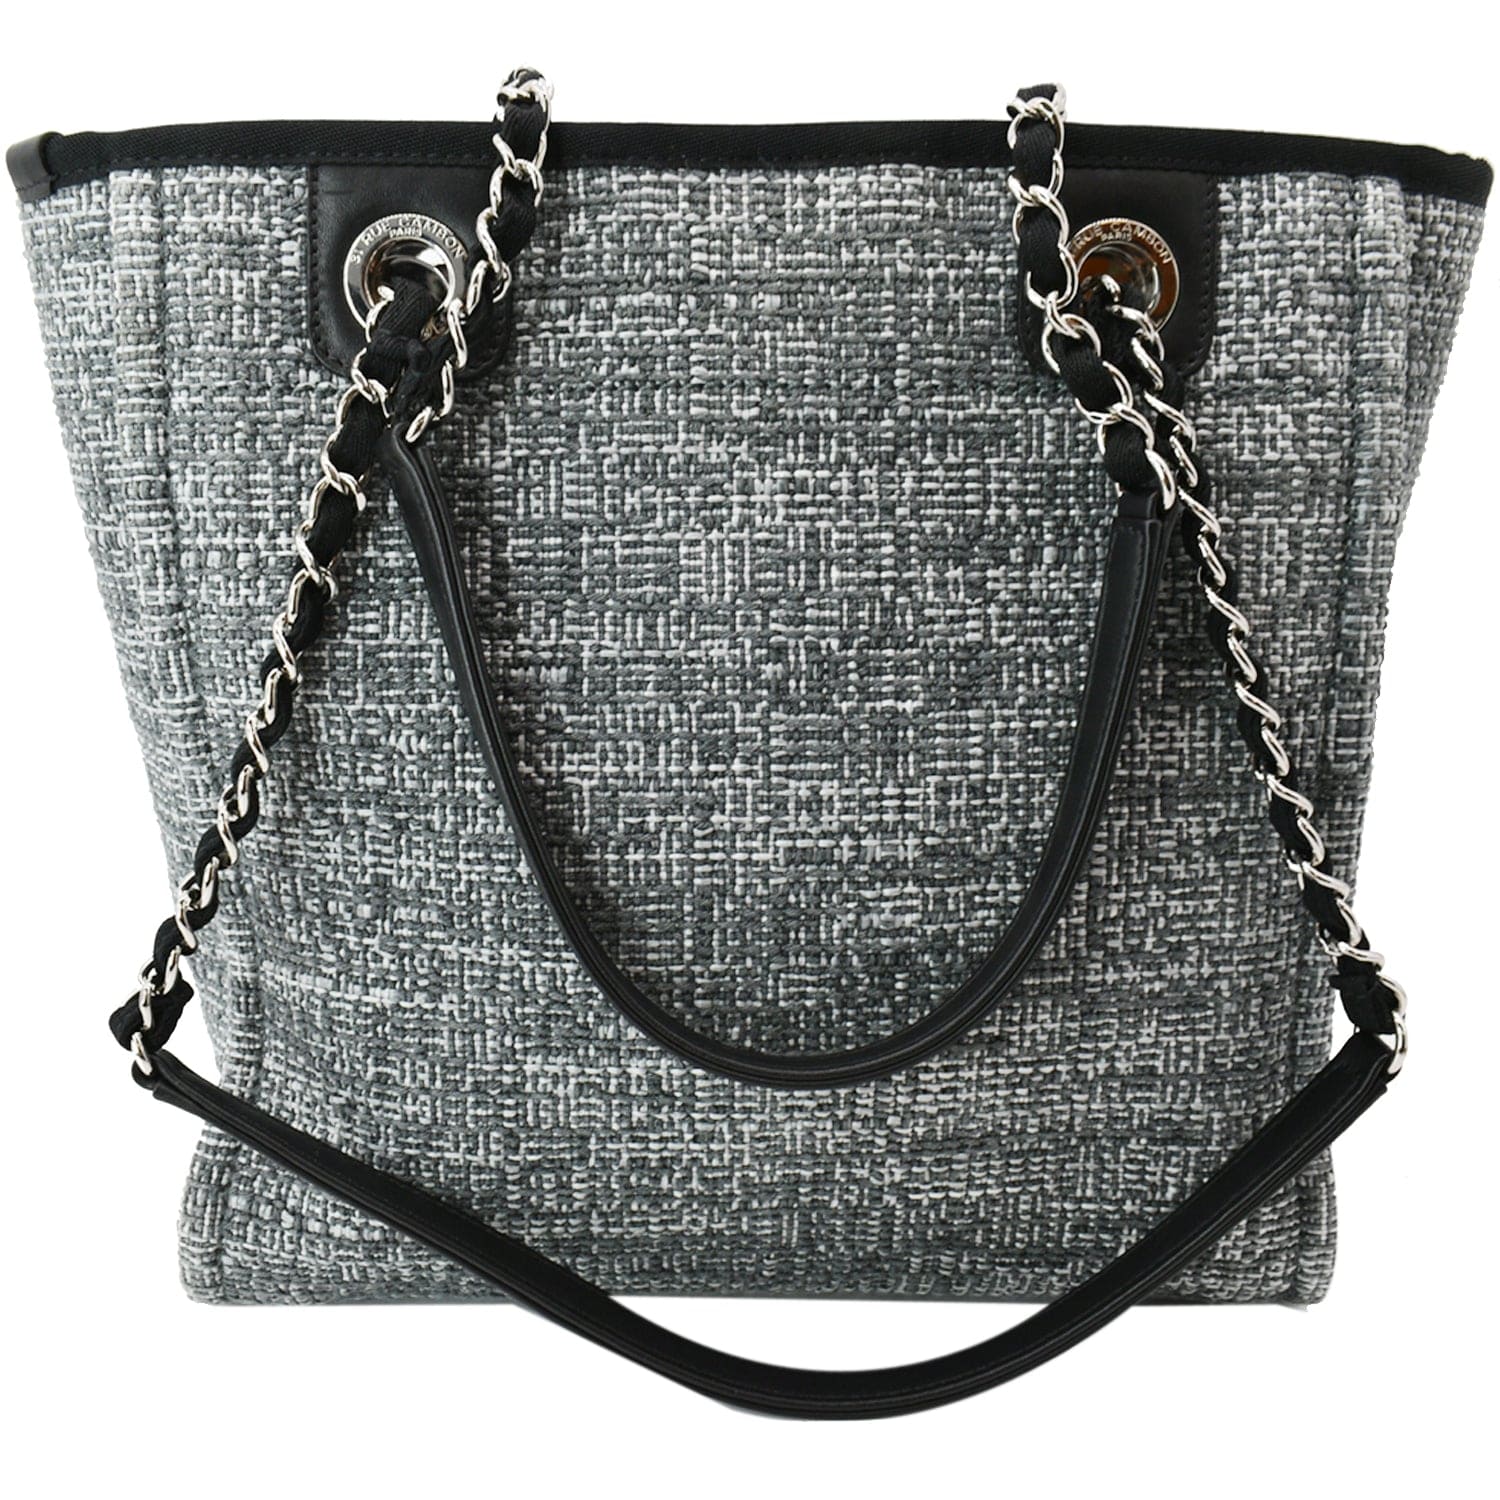 FWRD Renew Chanel Coco Mark Deauville Tote Bag in Grey